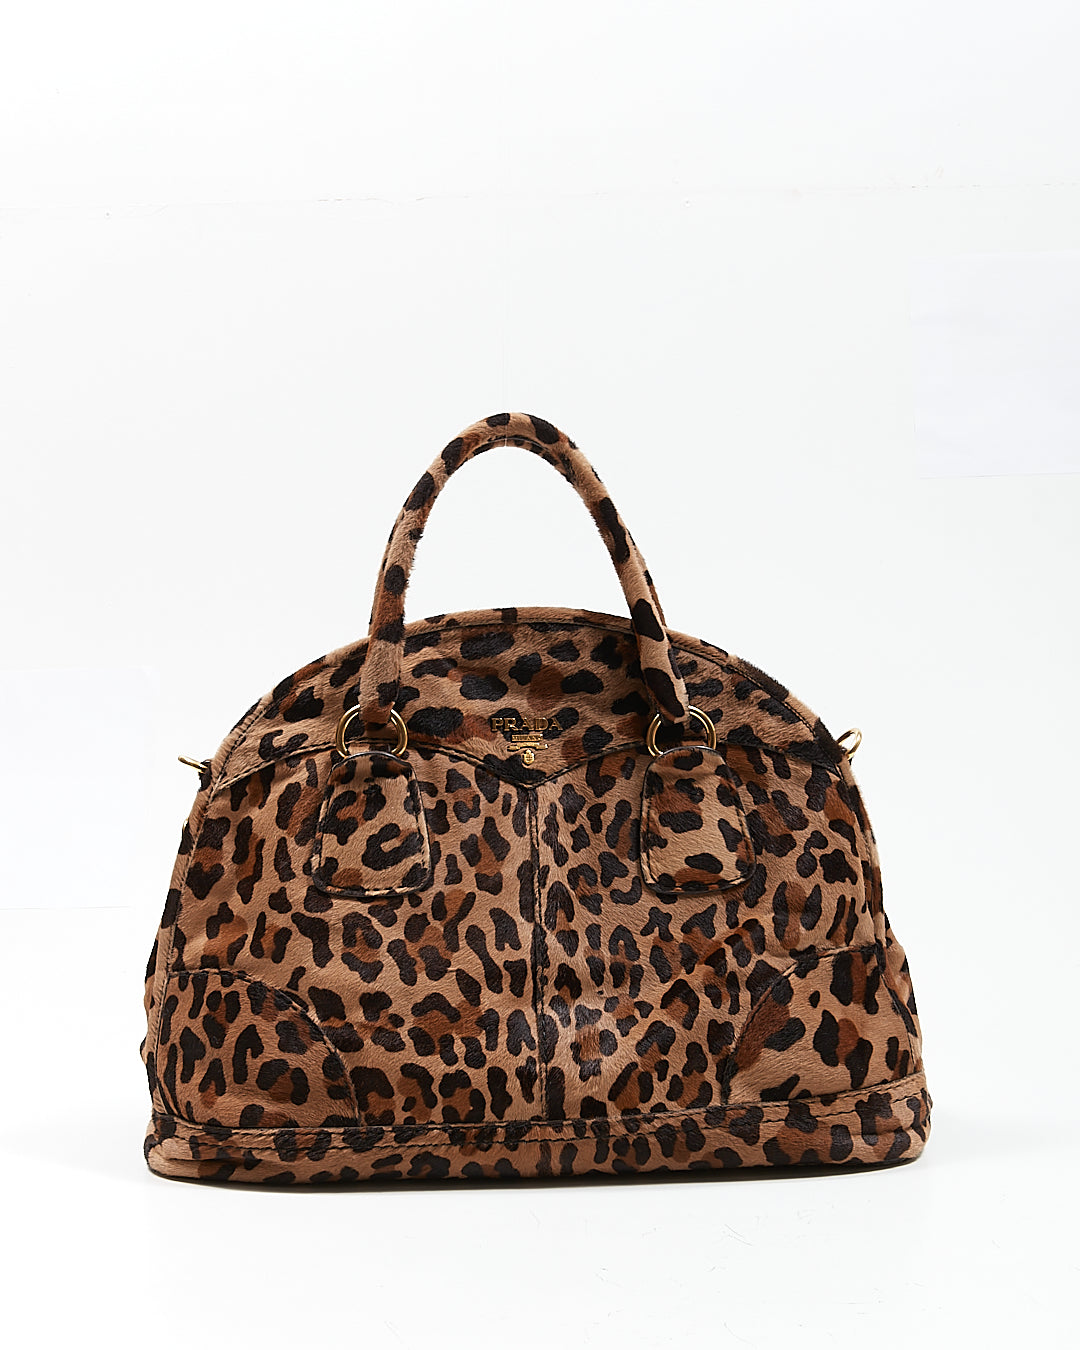 Prada Leopard Pony Hair Large Bowler Top Handle Bag